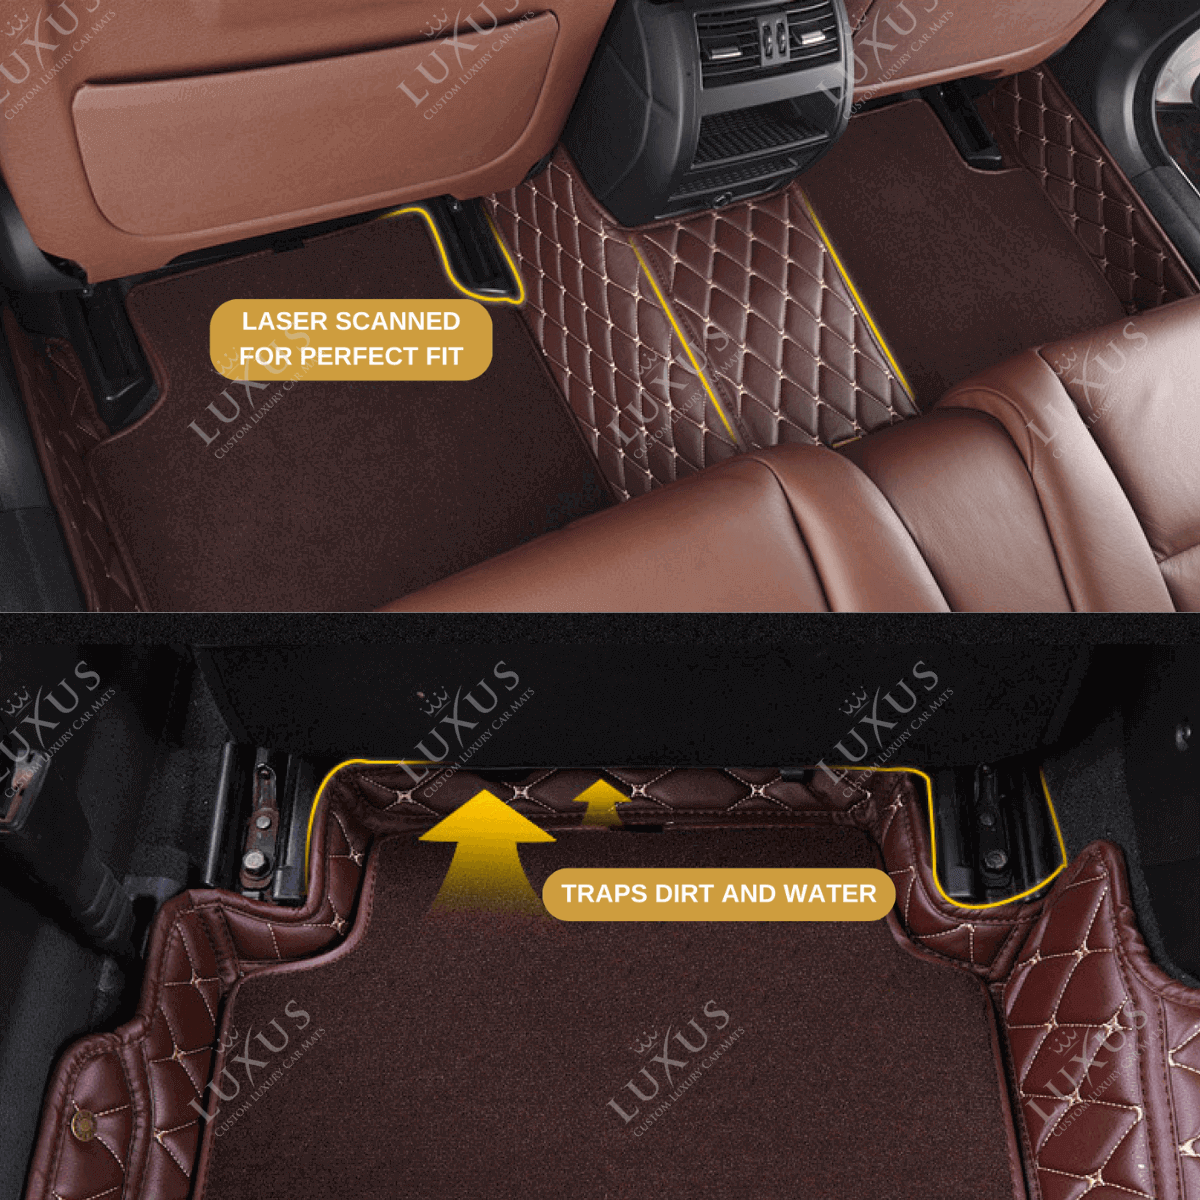 Black & Black Stitching Honeycomb Base & Beige Top Carpet Double Layer Luxury Car Mats Set